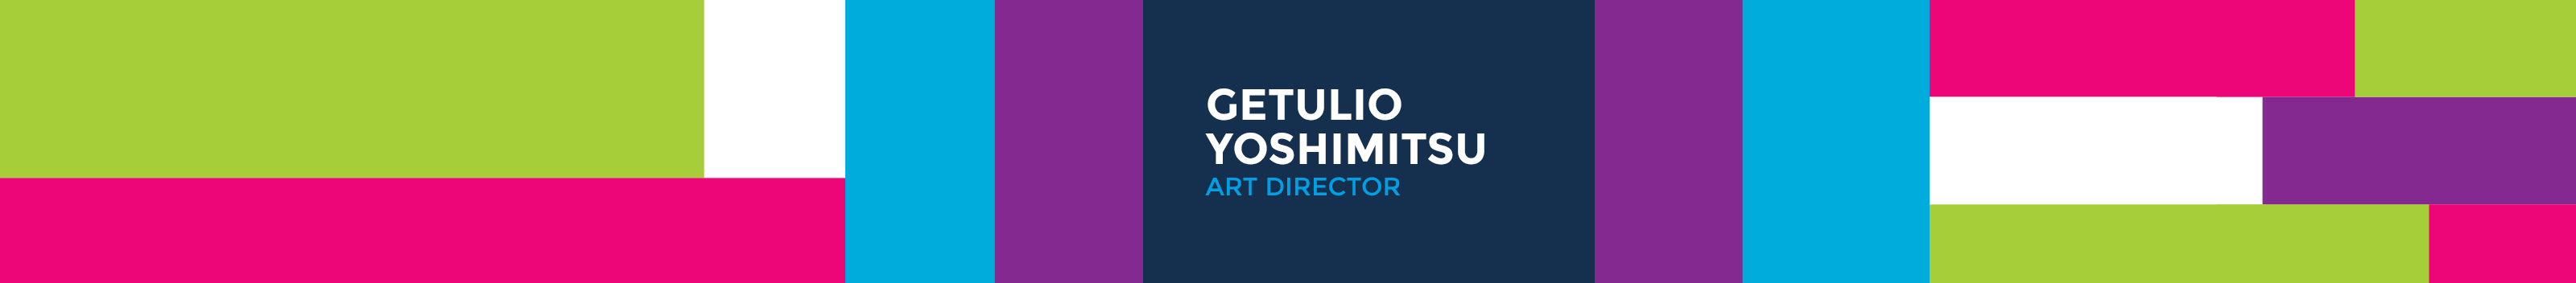 Getulio Yoshimitsu 的個人檔案橫幅